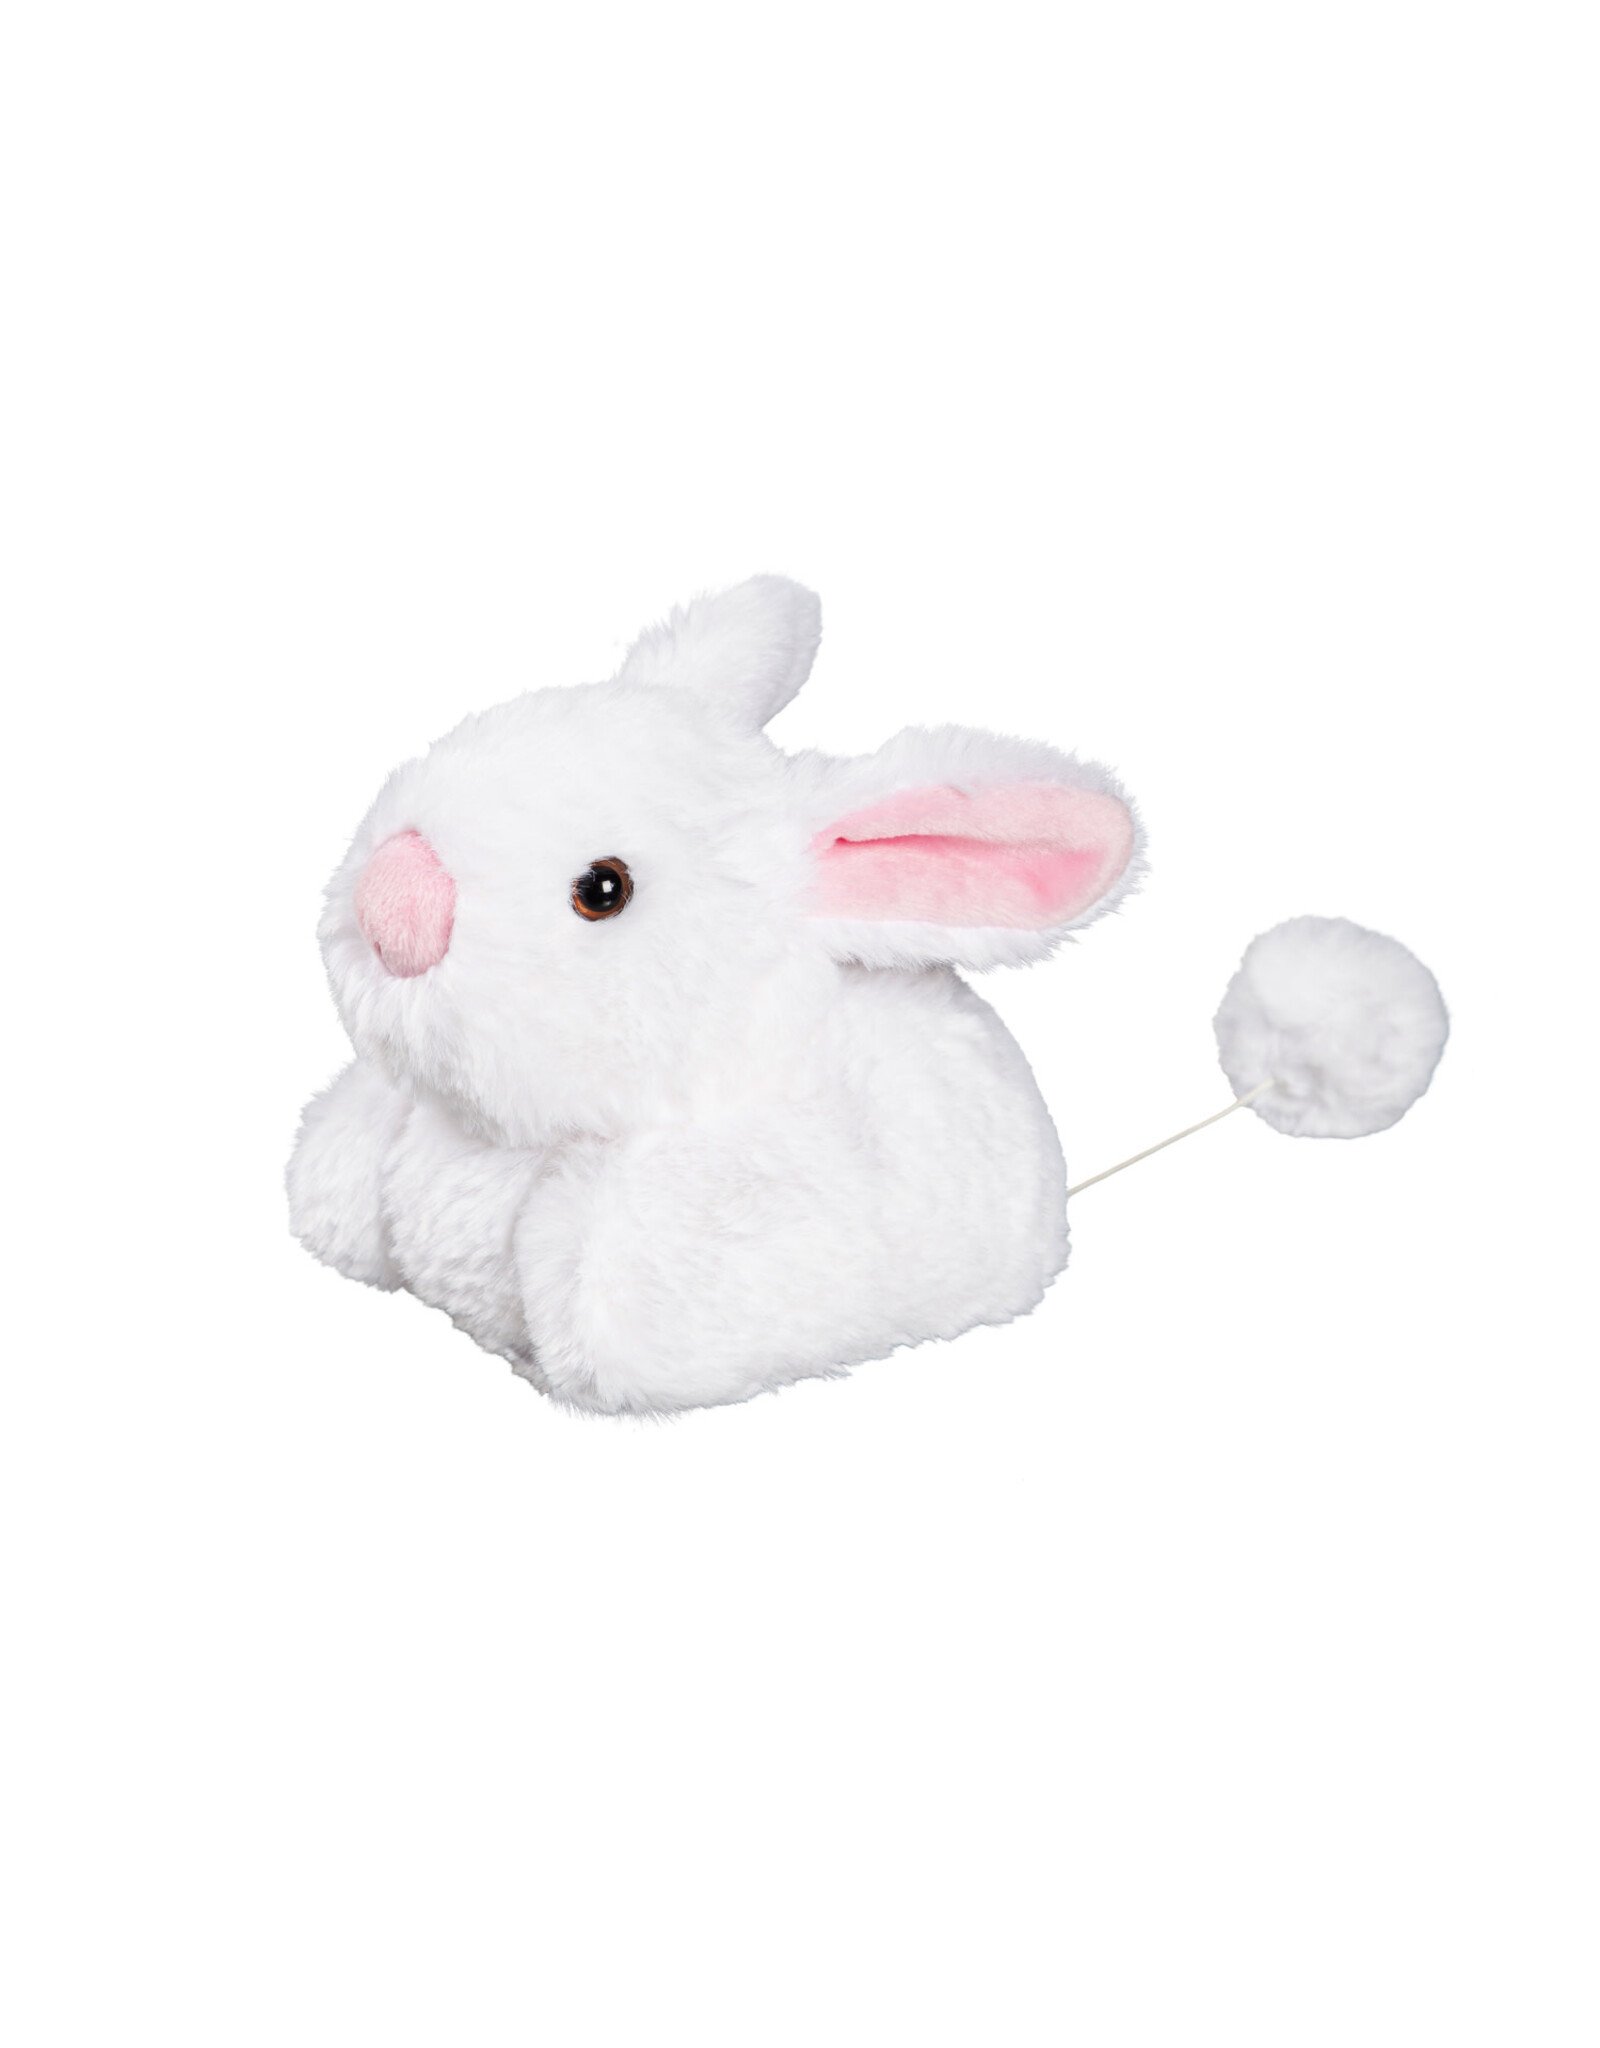 Evergreen Enterprises 5" Plush White Bunny with Pull String Movement